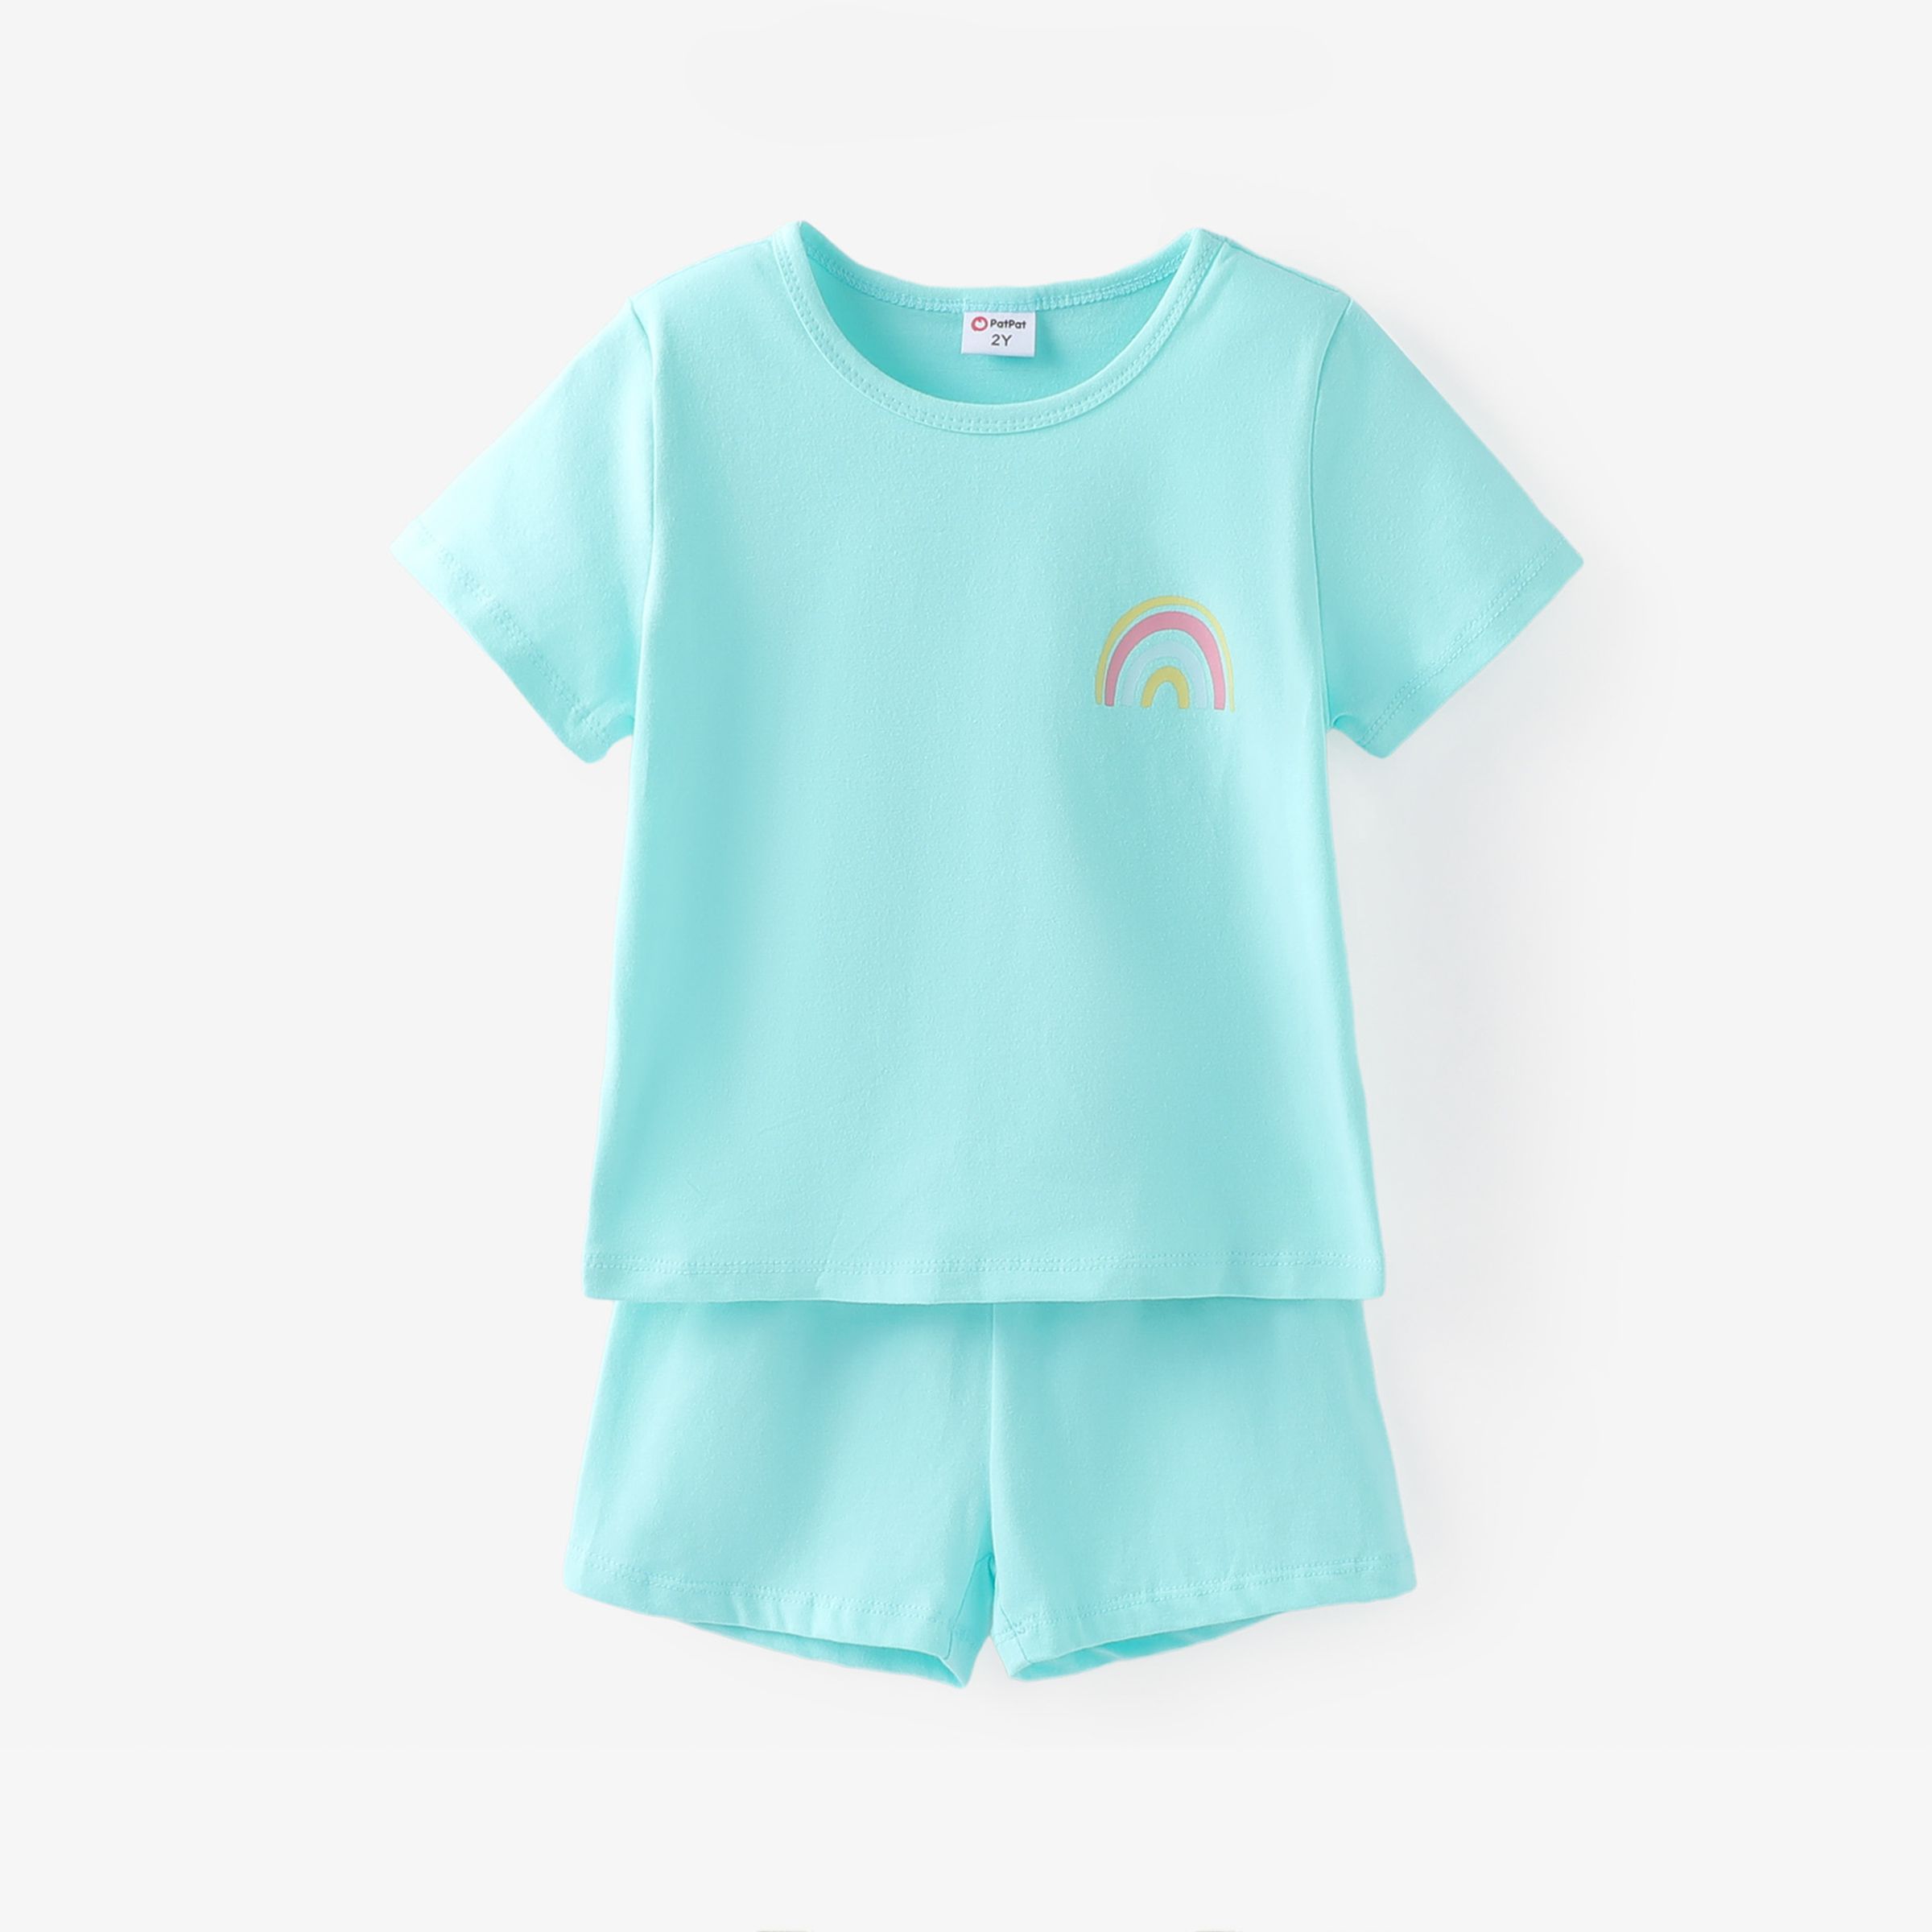 Toddler Boy/Girl 2pcs Rainbow Print Tee And Shorts Set